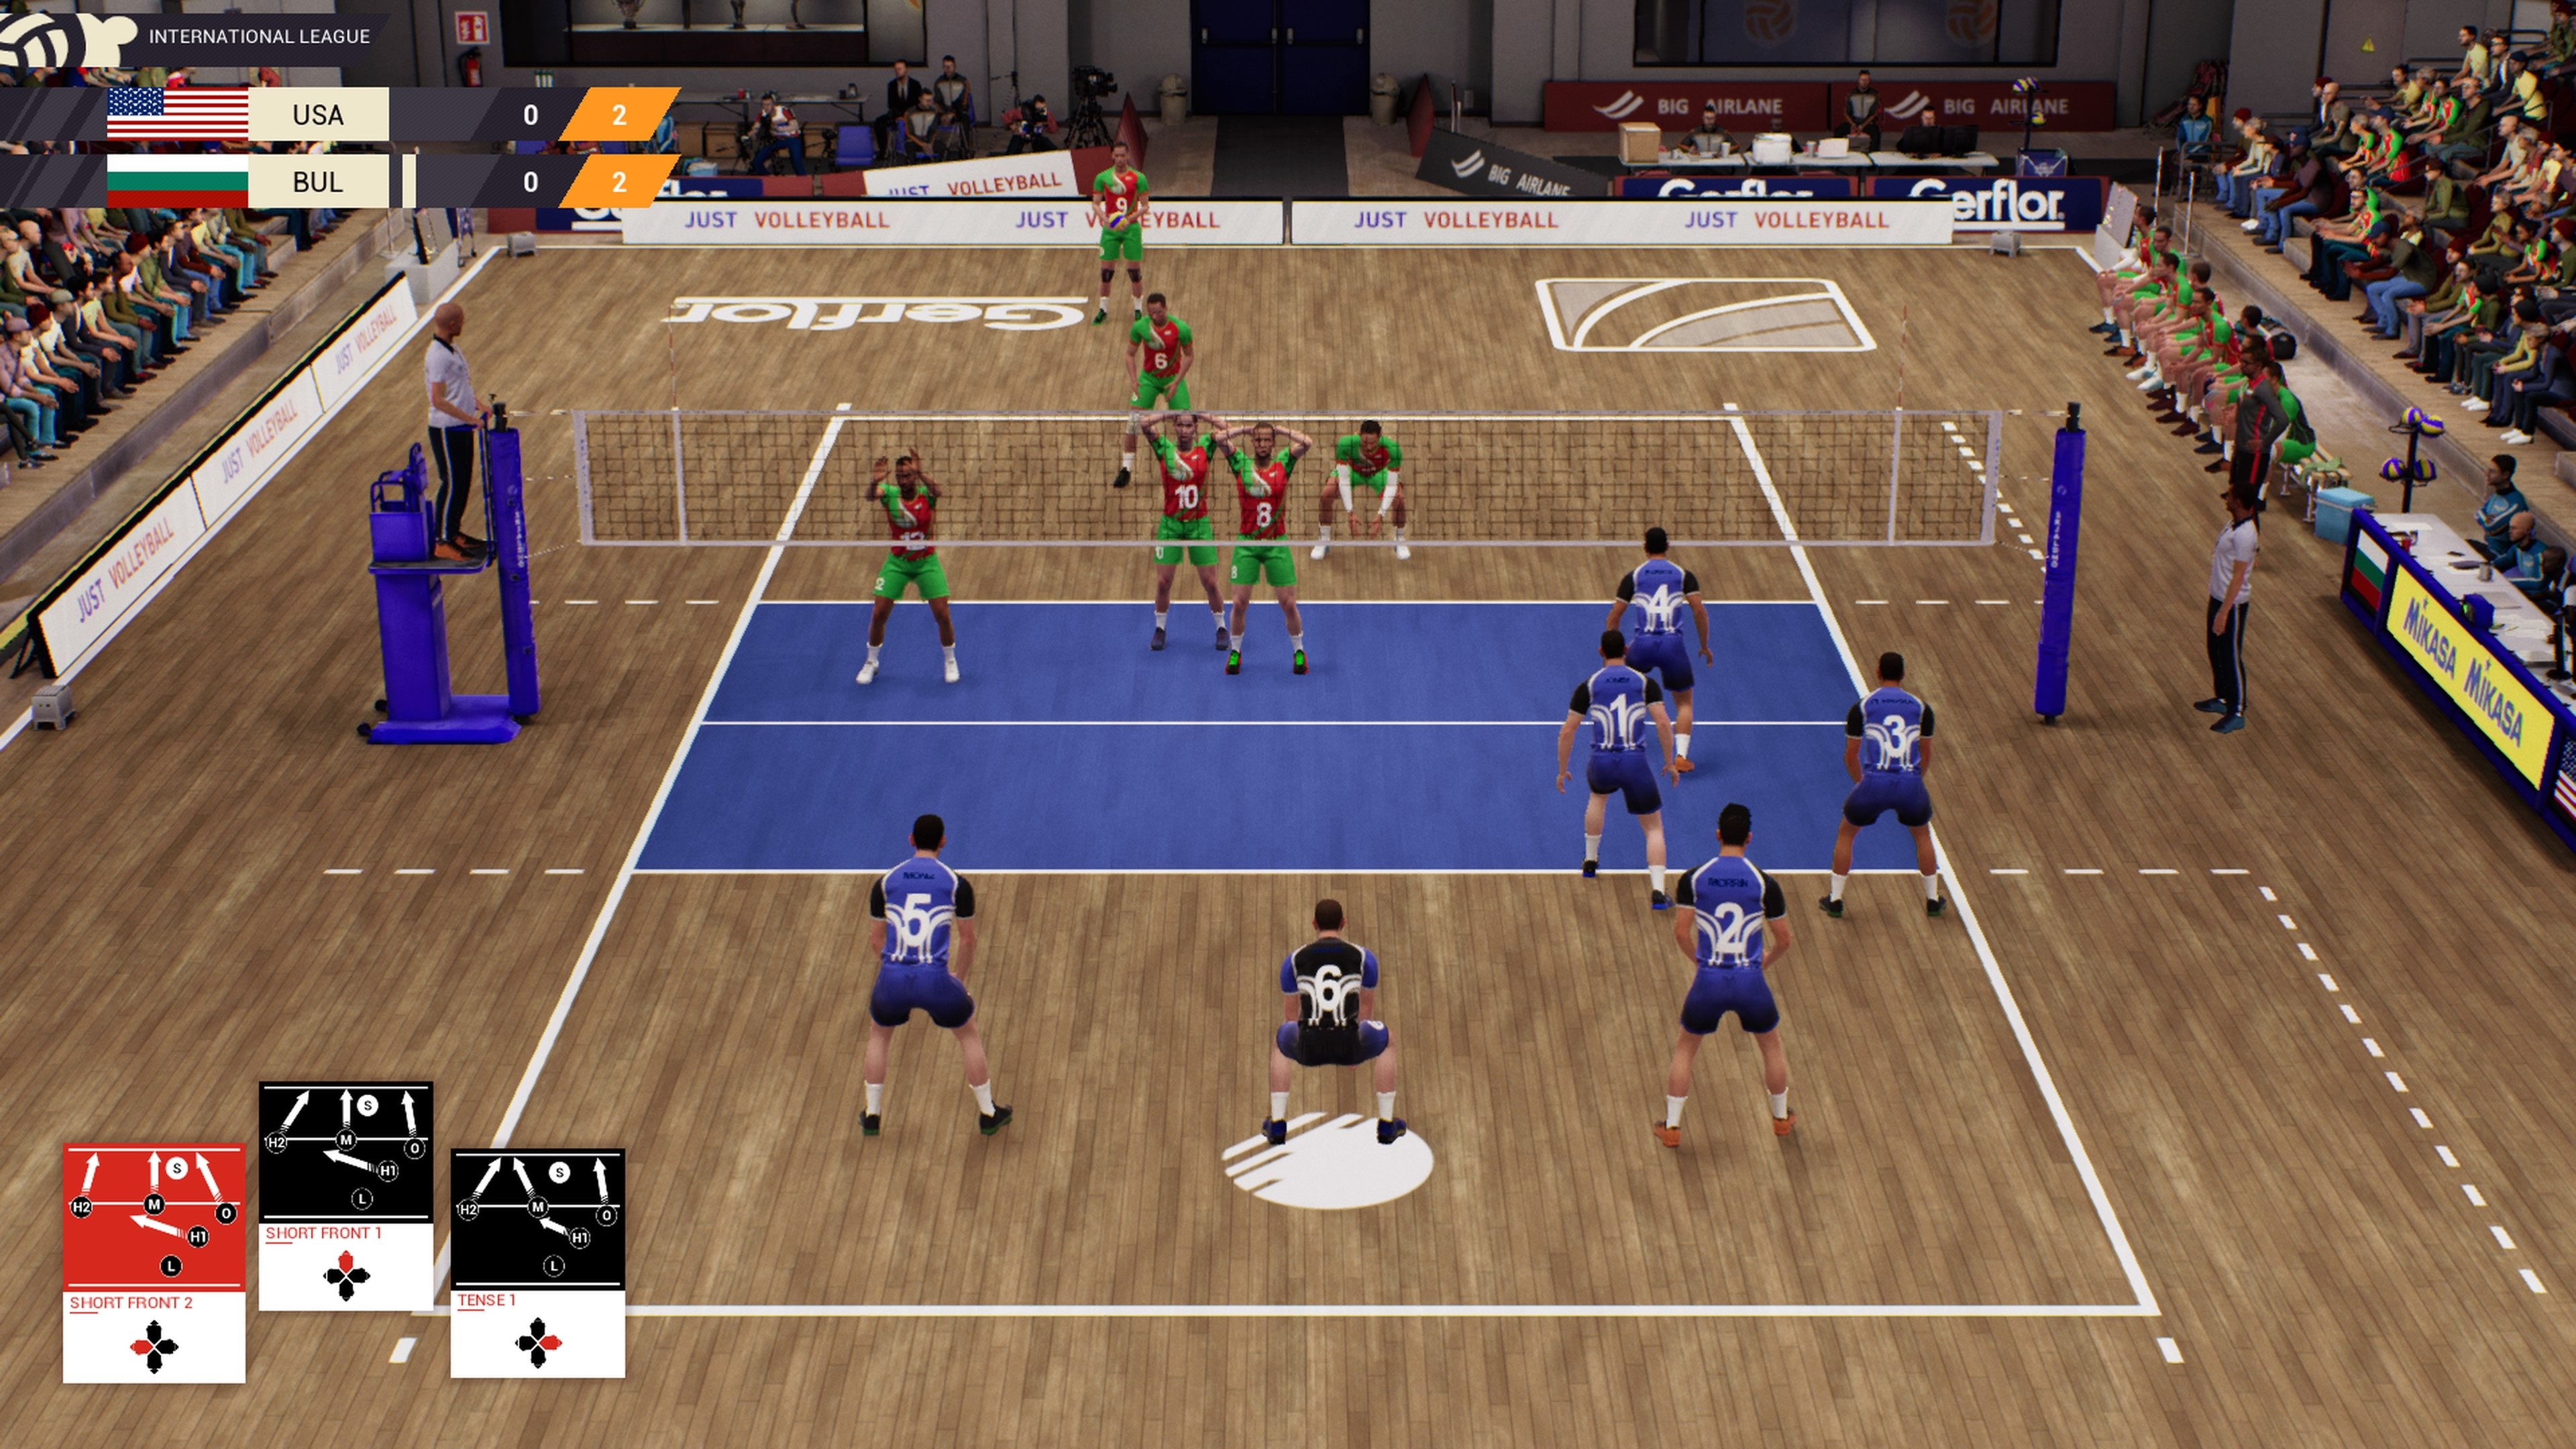 Волейбол хорошей игры. The Spike Volleyball игра. Spike Volleyball ps4. Spike Volleyball (PC). Волейболисты в игре.